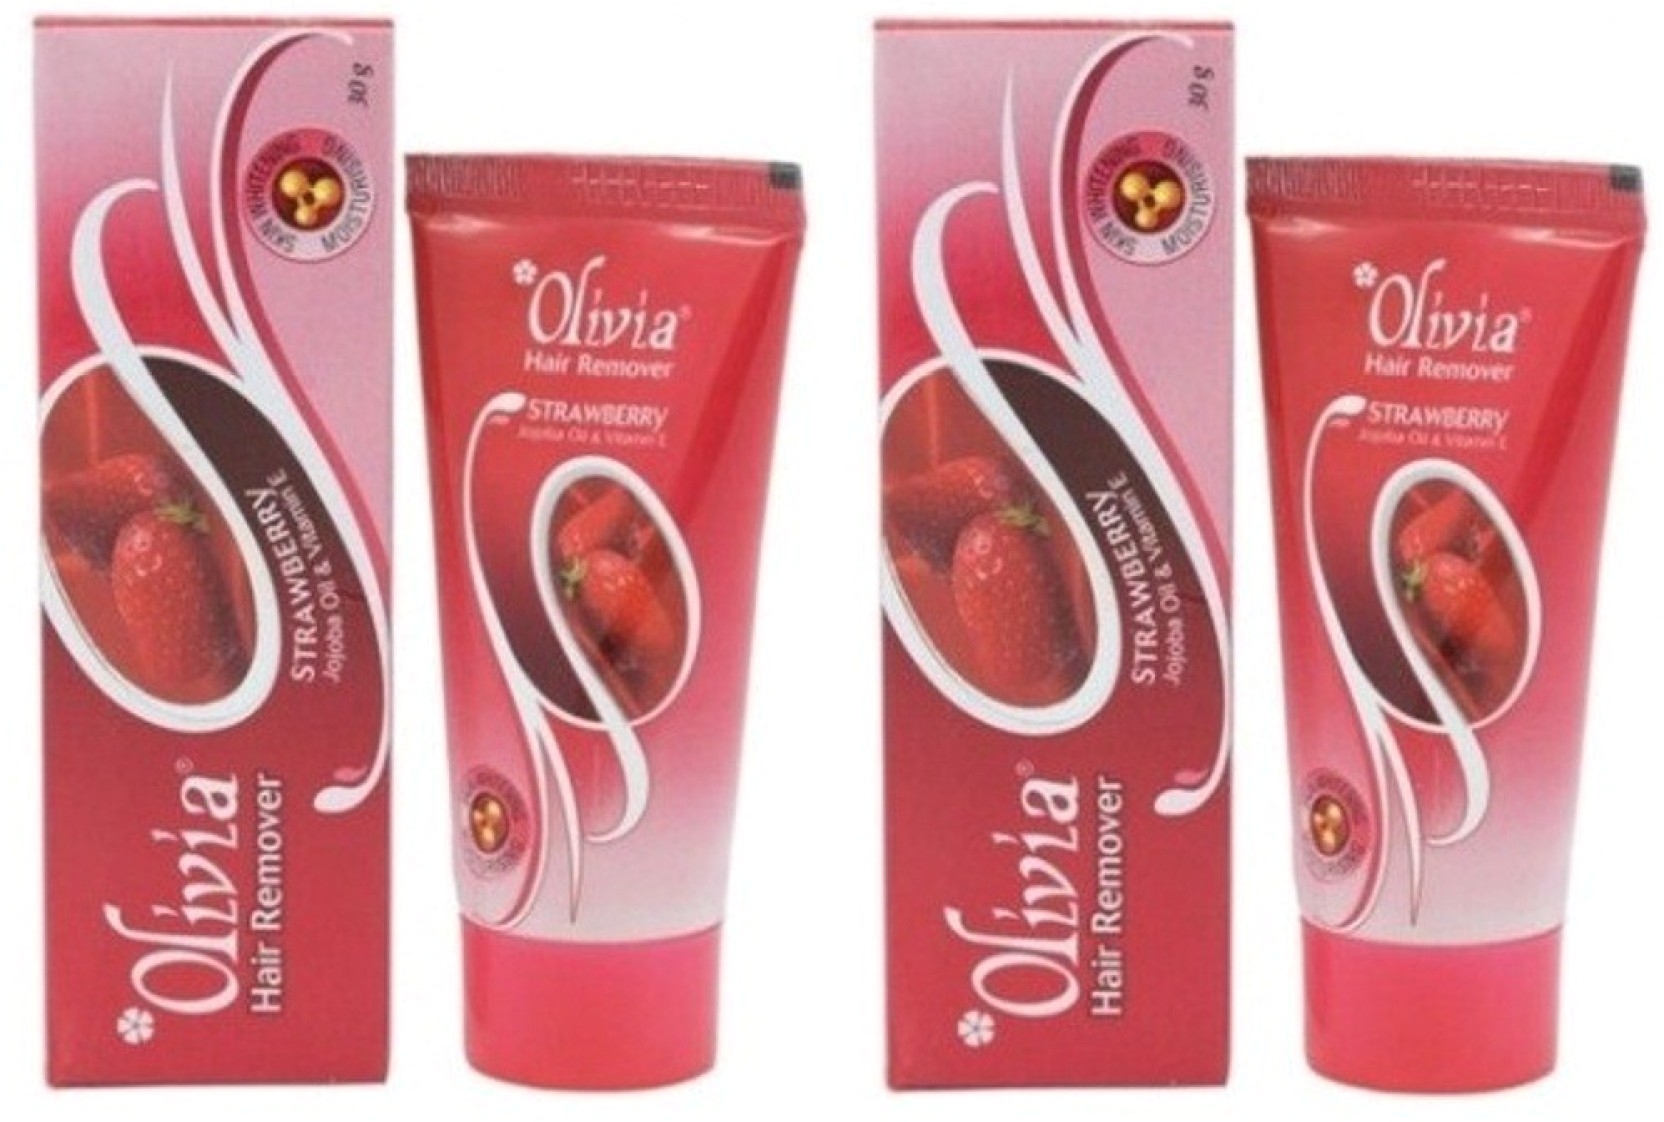 Ponds Bb Cream Light Olivia Strawberry Hair Removal Cream Pack Of 2 Cream Price In